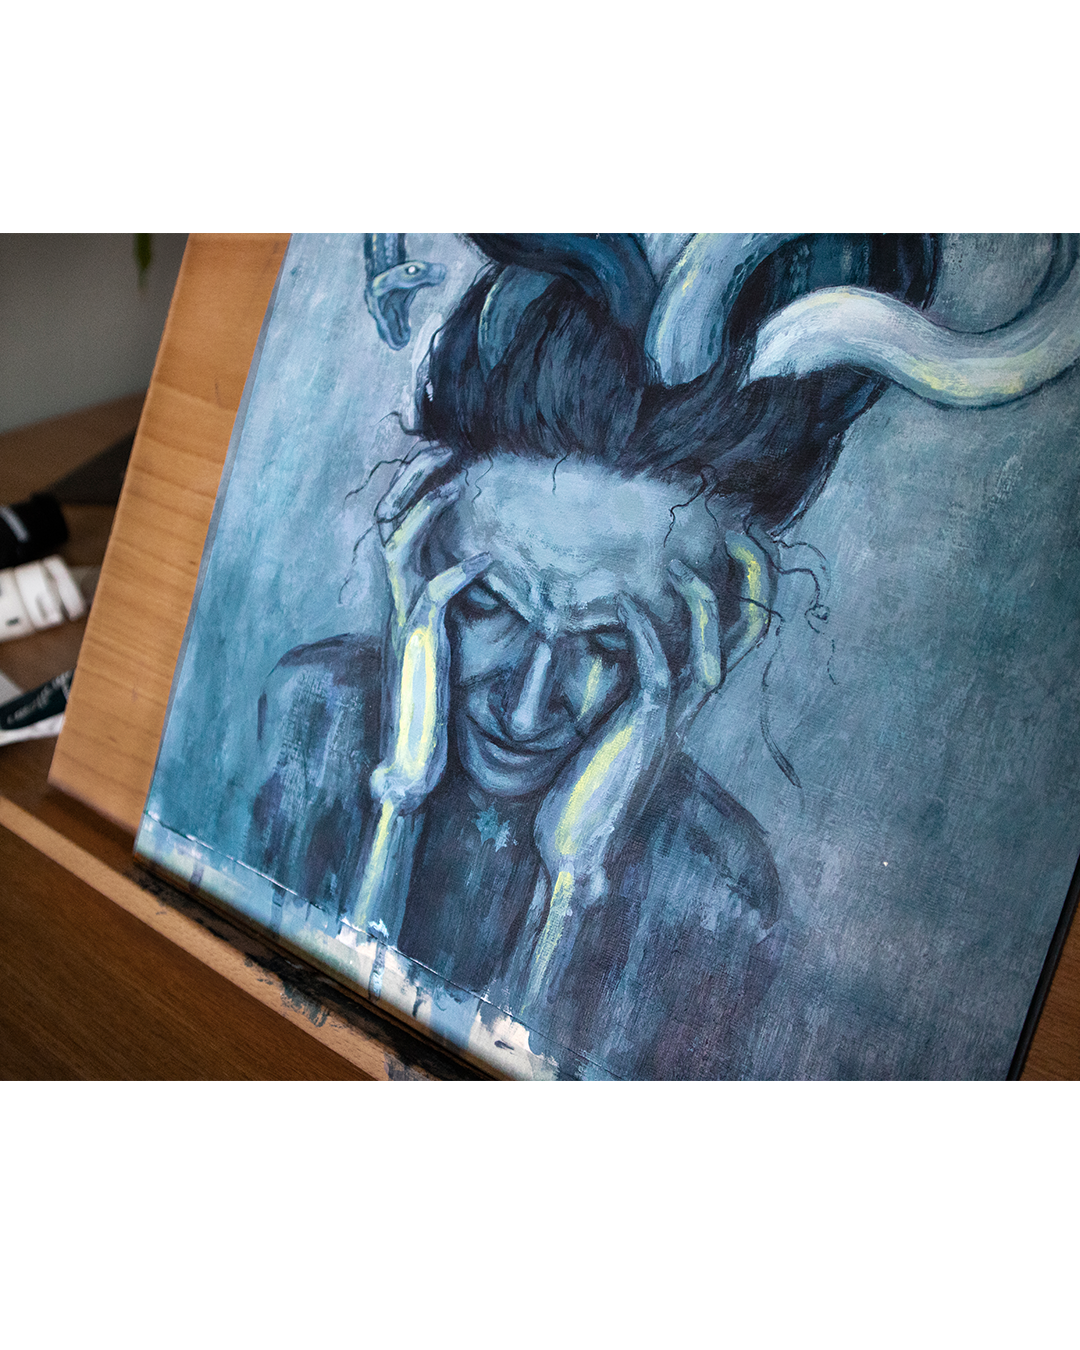 Forgiving Medusa | Original Painting - SOLD